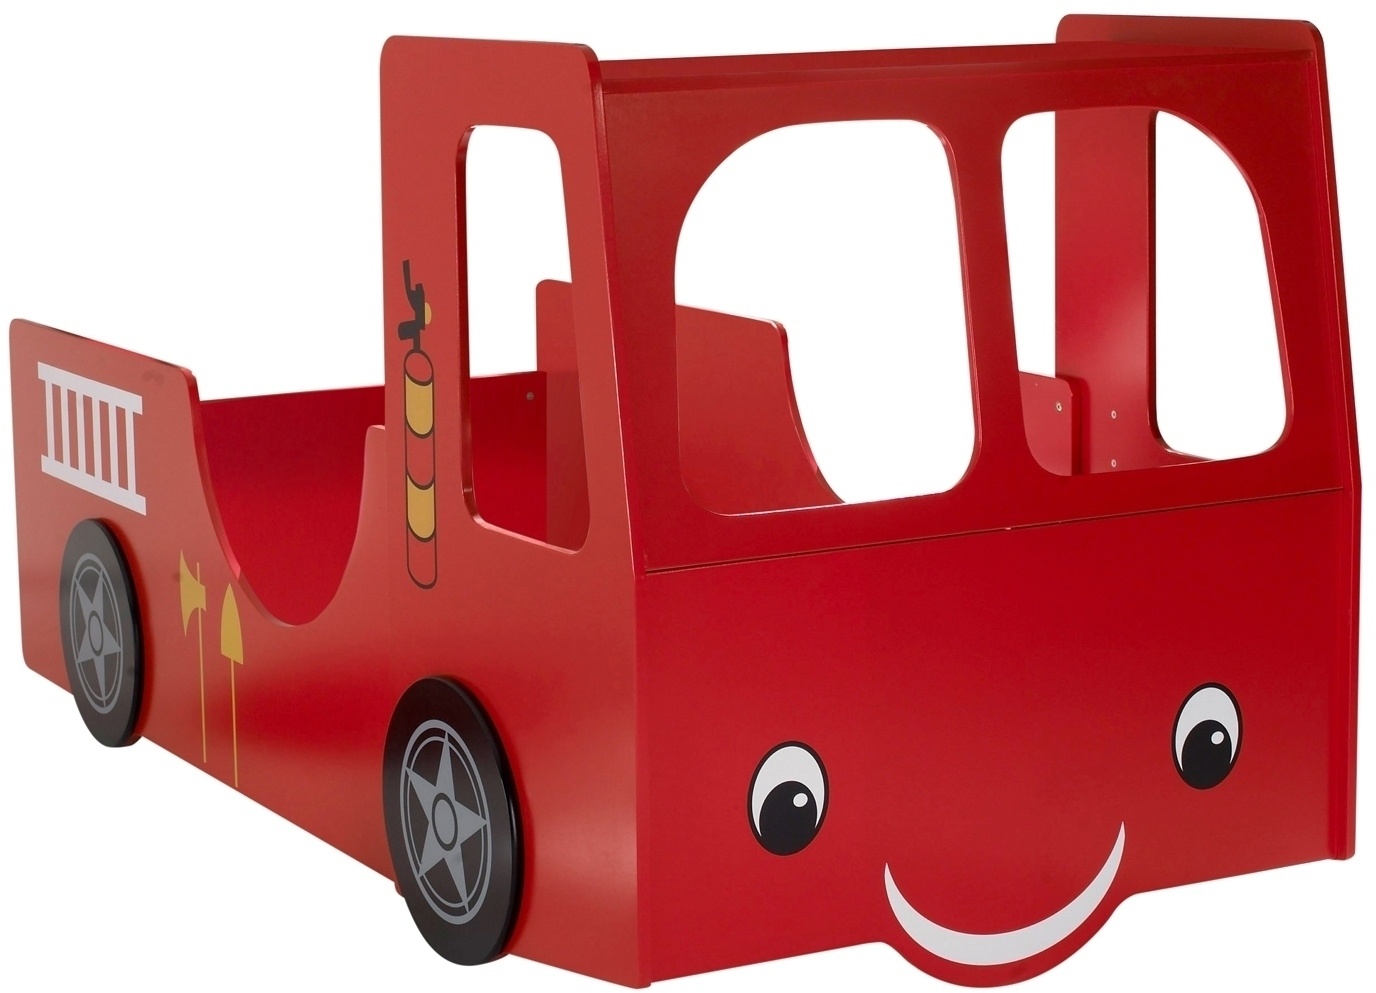 Begabino Kinderbett HEAT, Rot - 90 x 200 cm - Feuerwehrauto